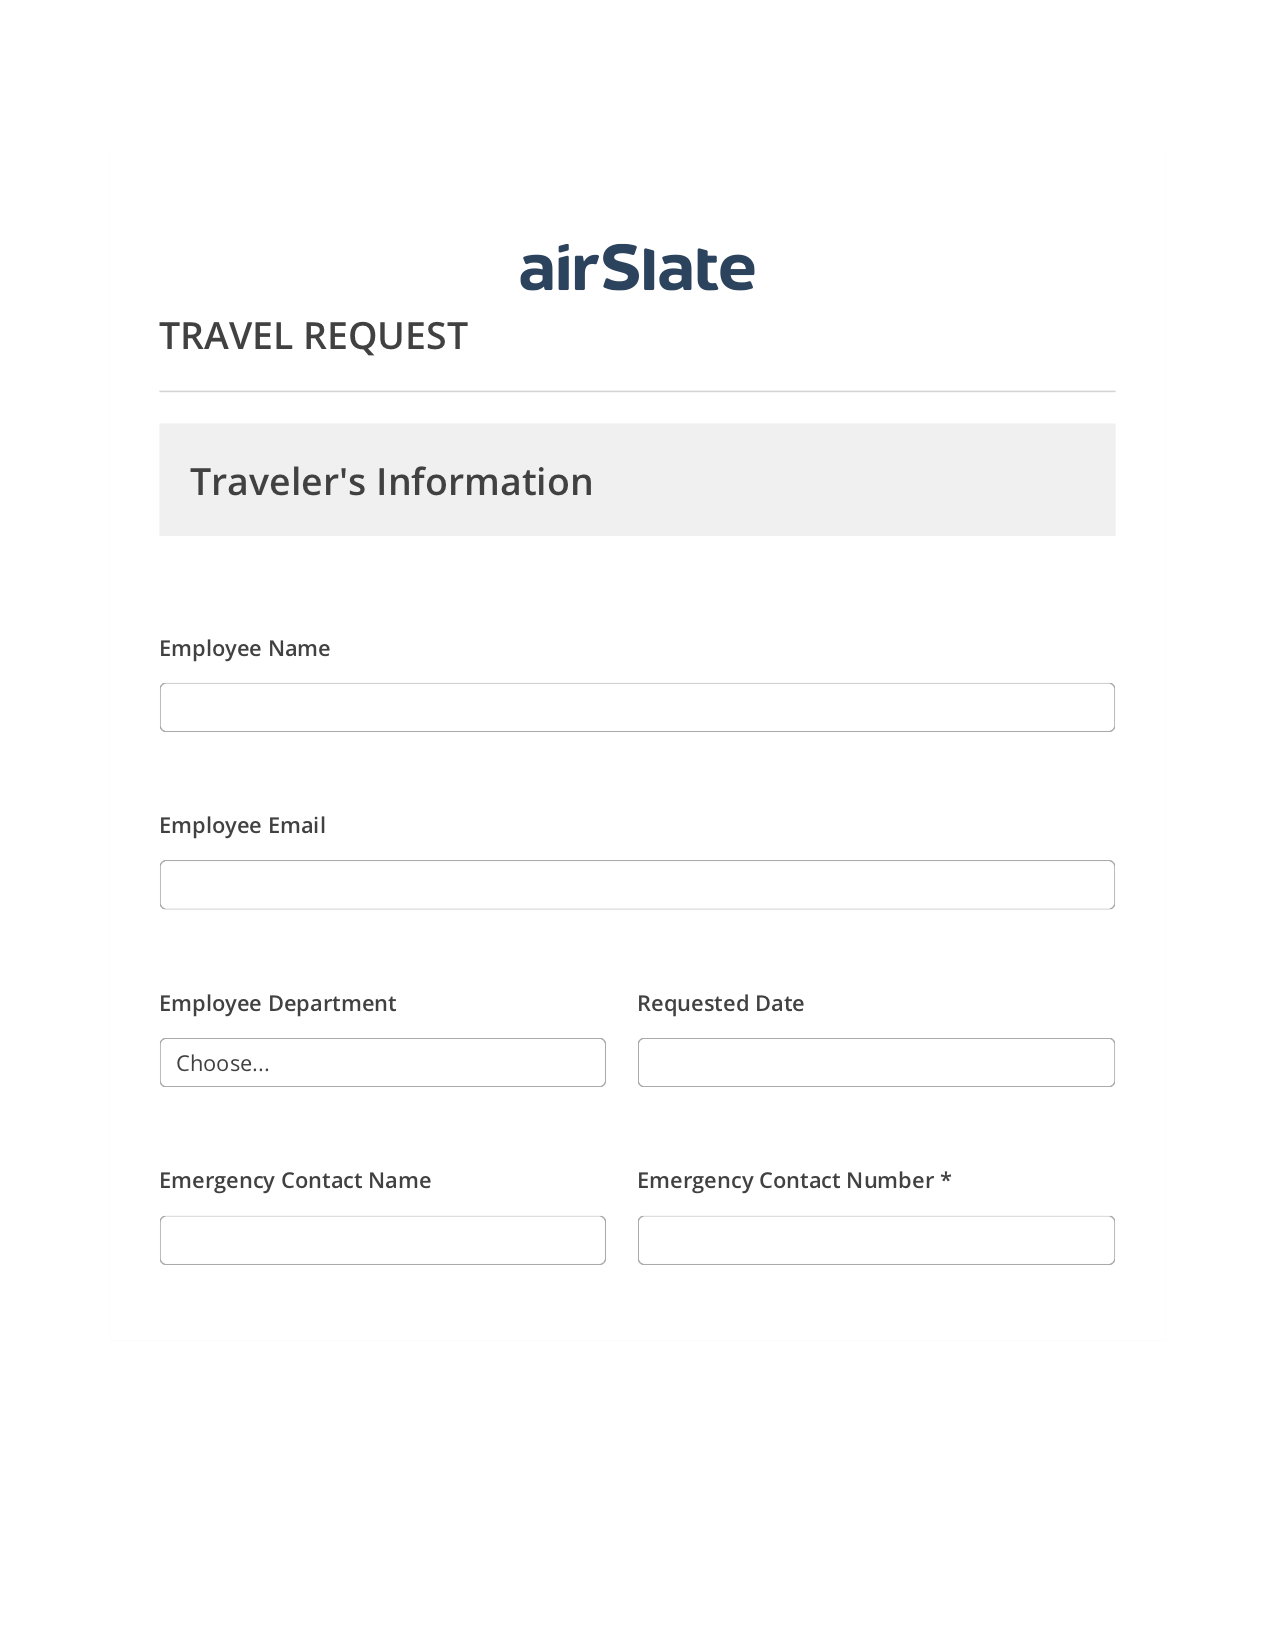 Travel Request Flow Mailchimp add recipient to audience Bot